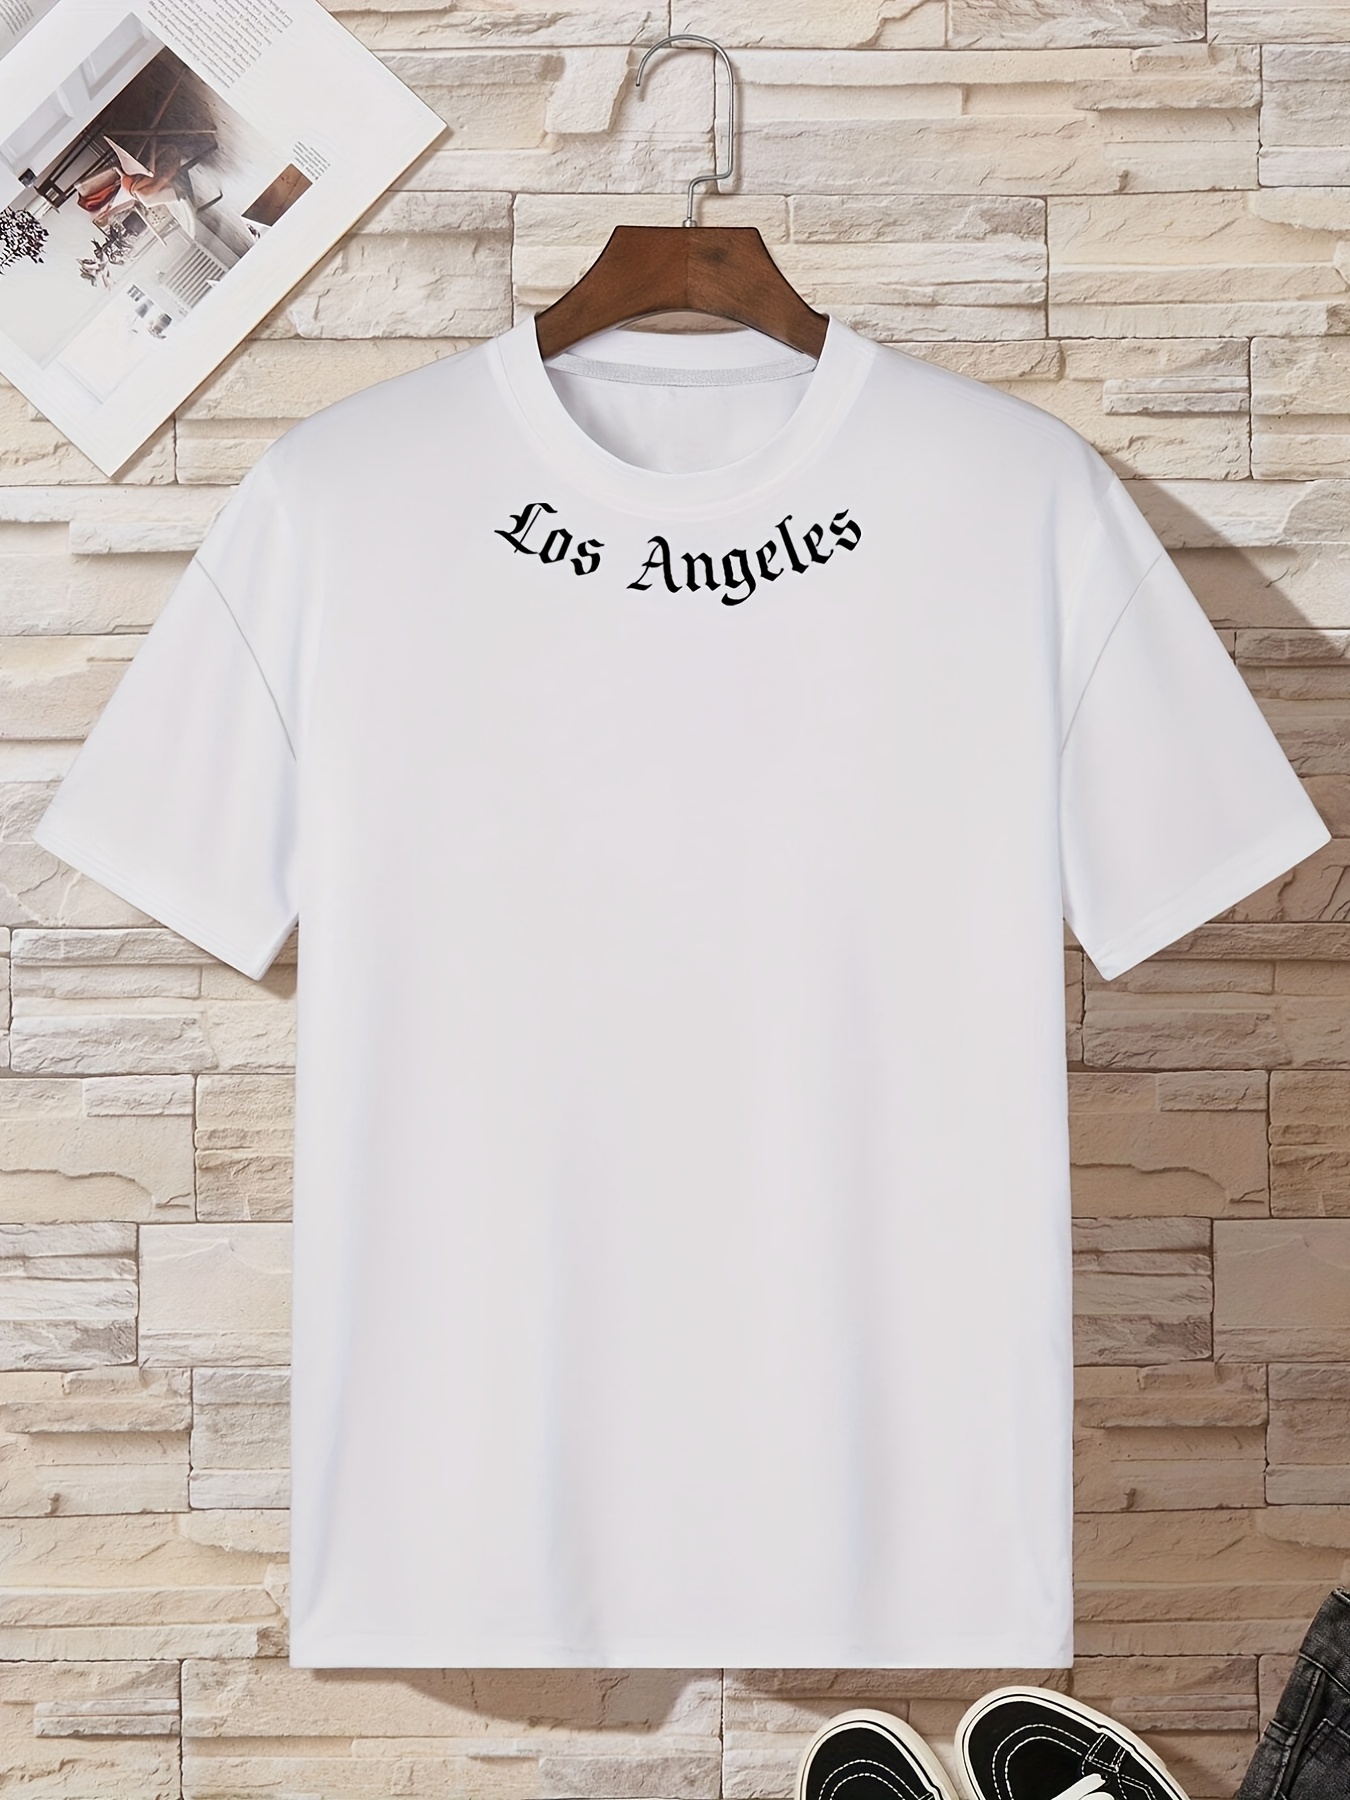 Los Angeles Graphic T-shirt